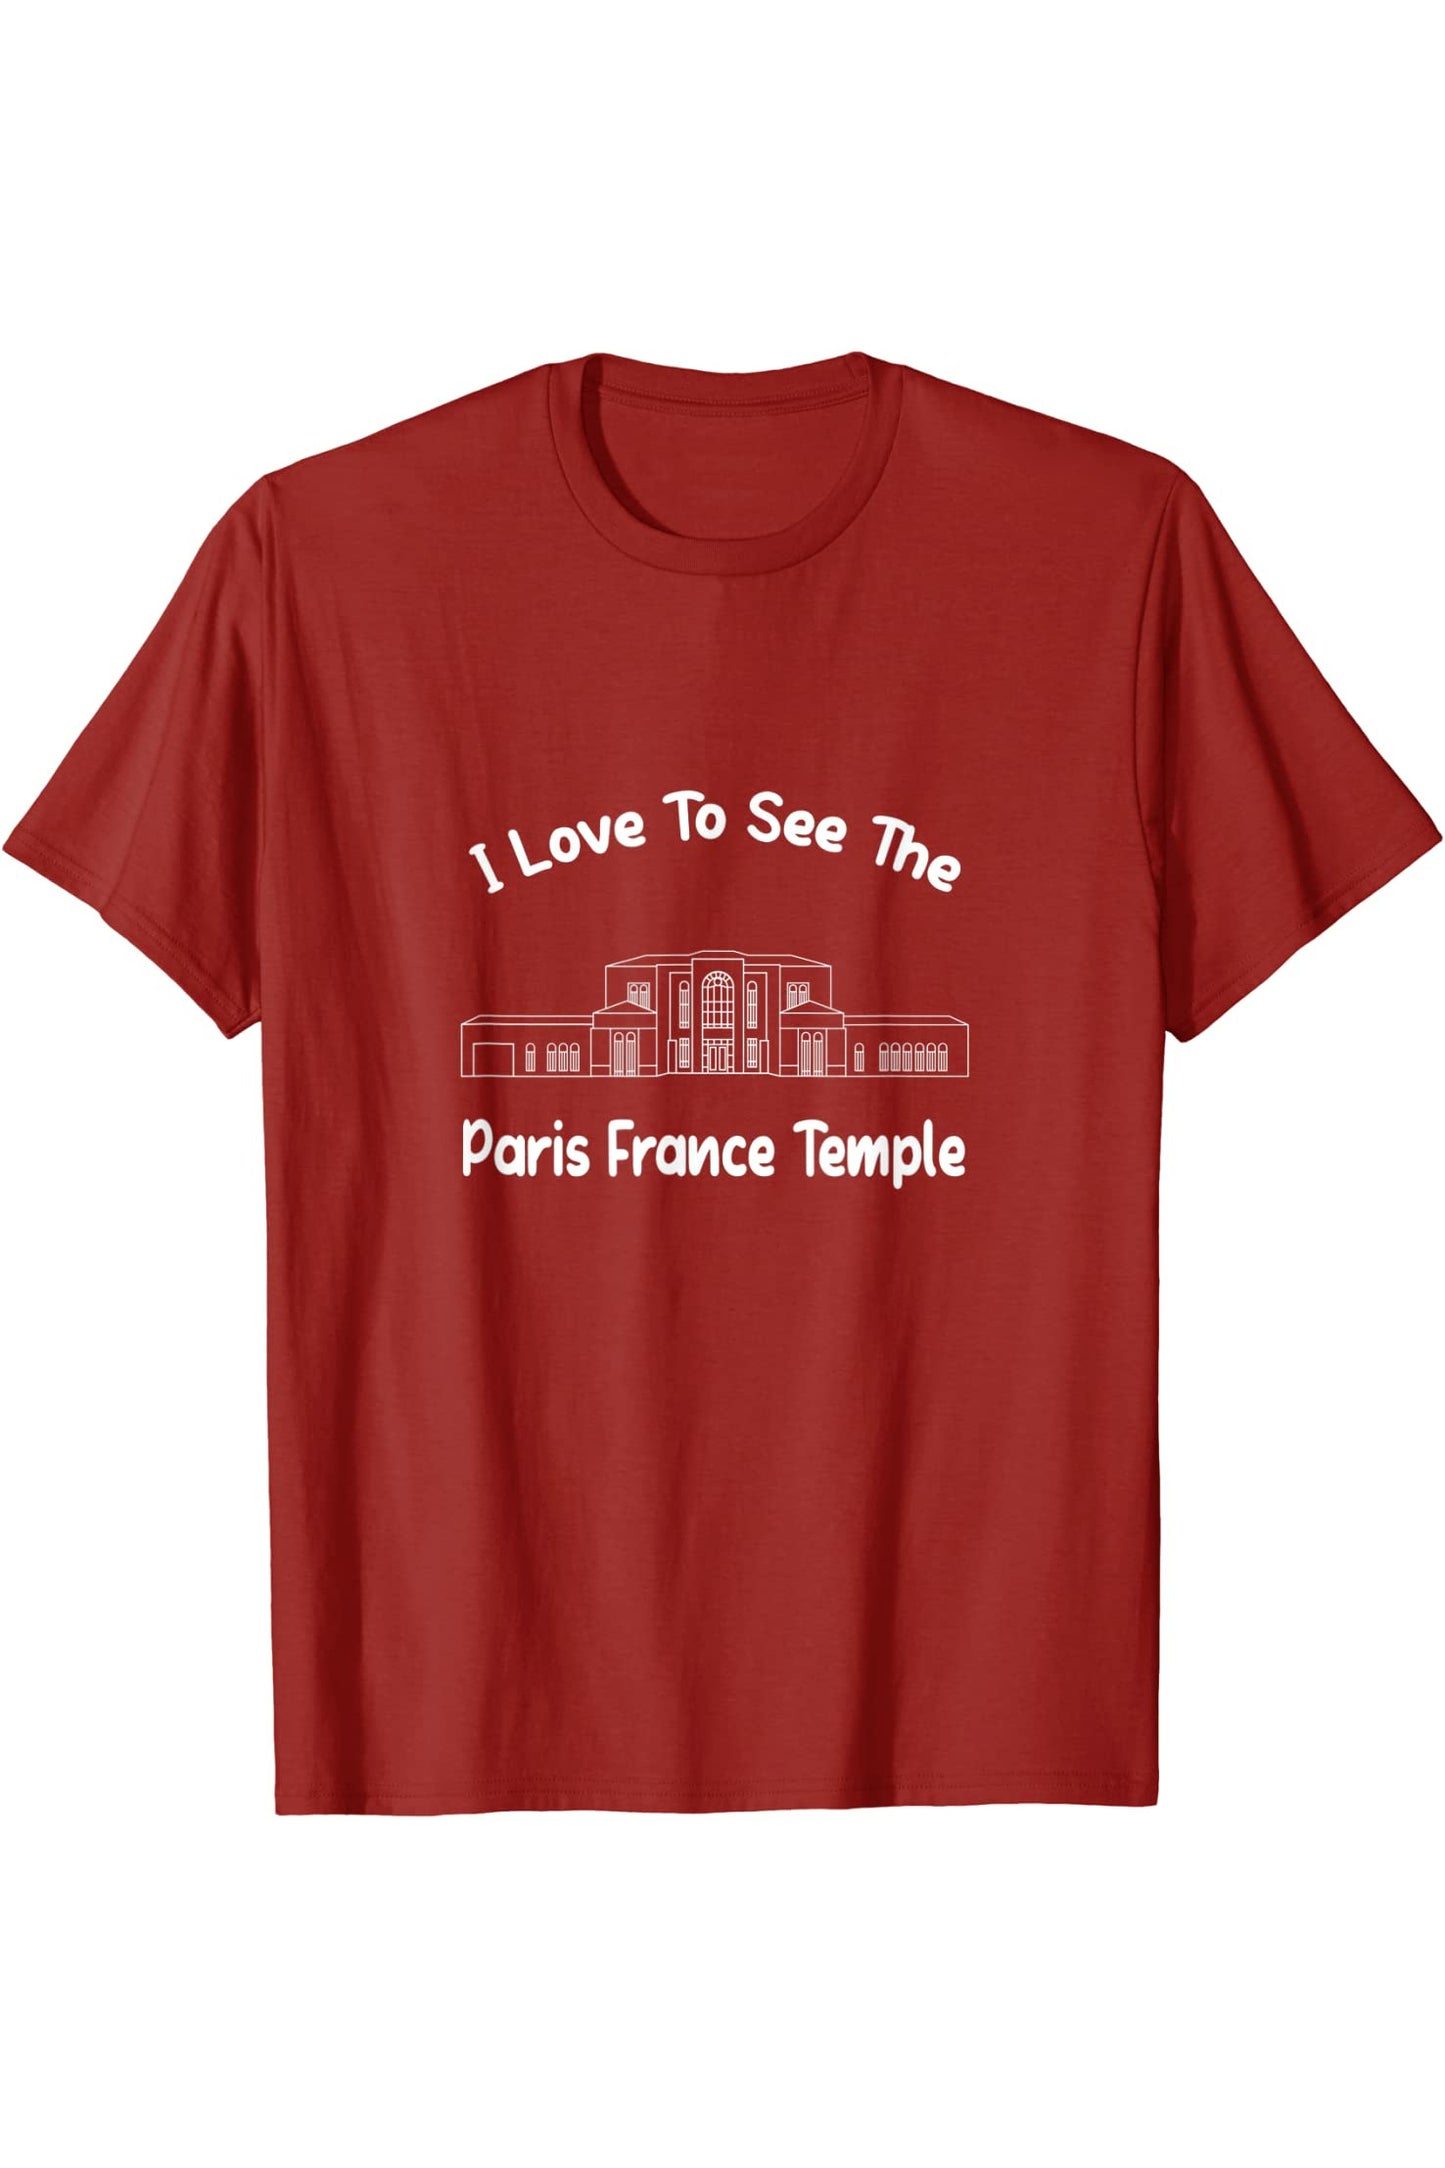 Parigi Francia Tempio, mi piace vedere il mio tempio, primario T-Shirt